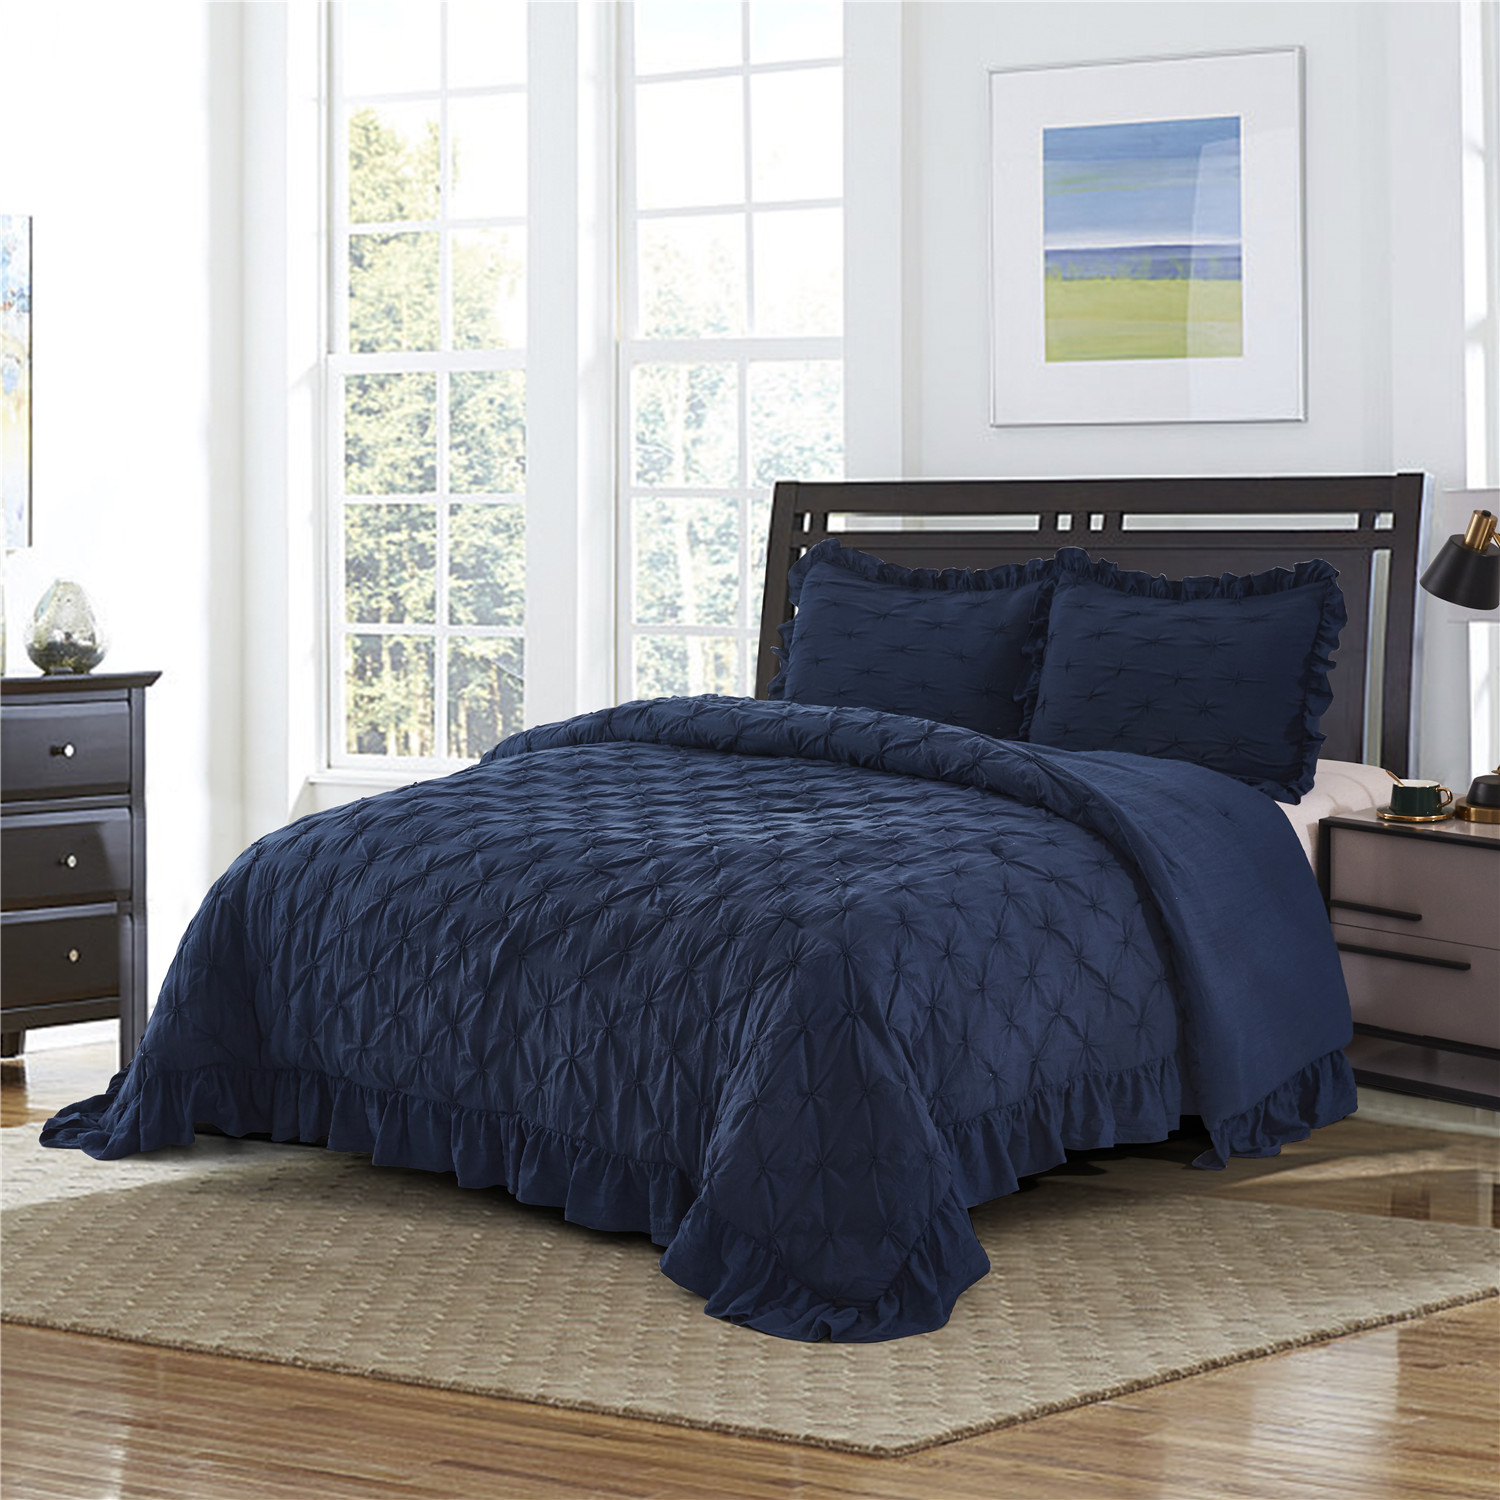 Hig 3 Piece Shabby Chic Comforter Set, Navy Blue Queen Bedspreads